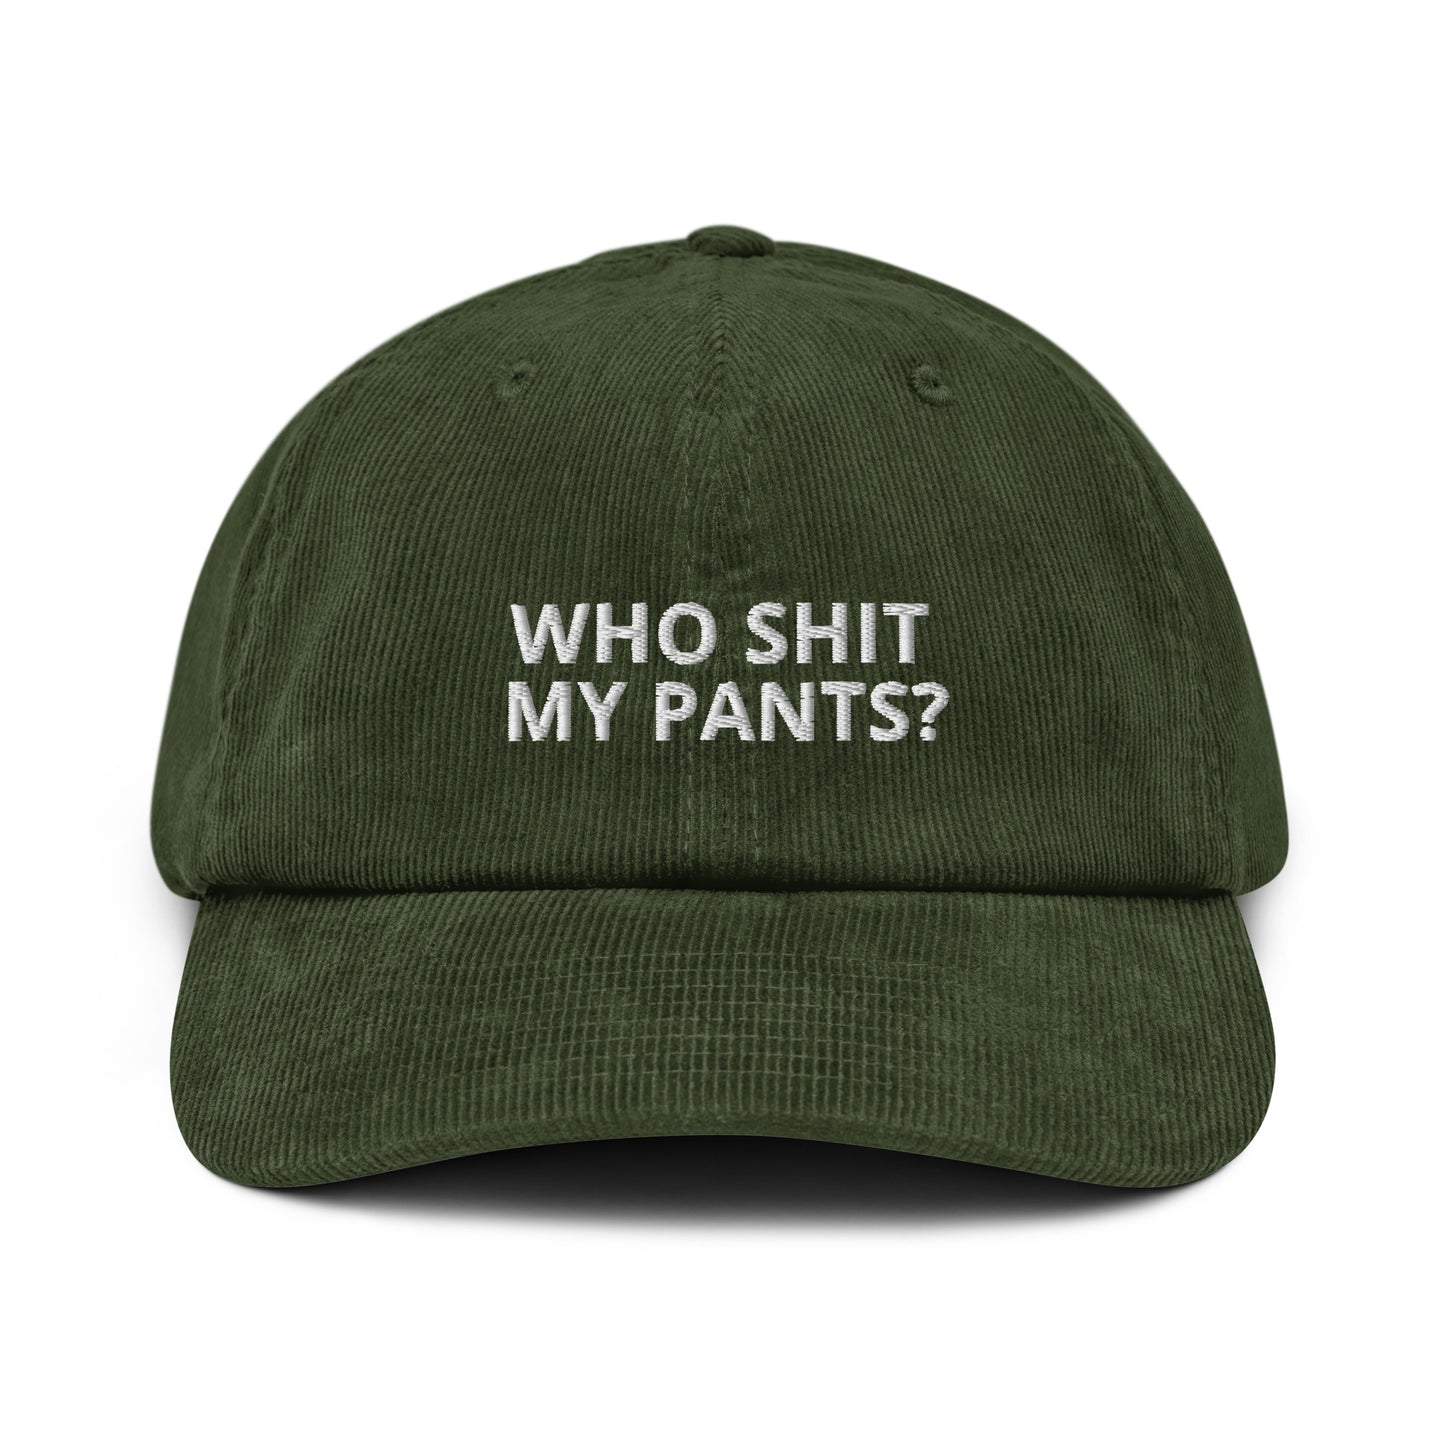 Cord-Cap mit dem Slogan "Who shit my pants?